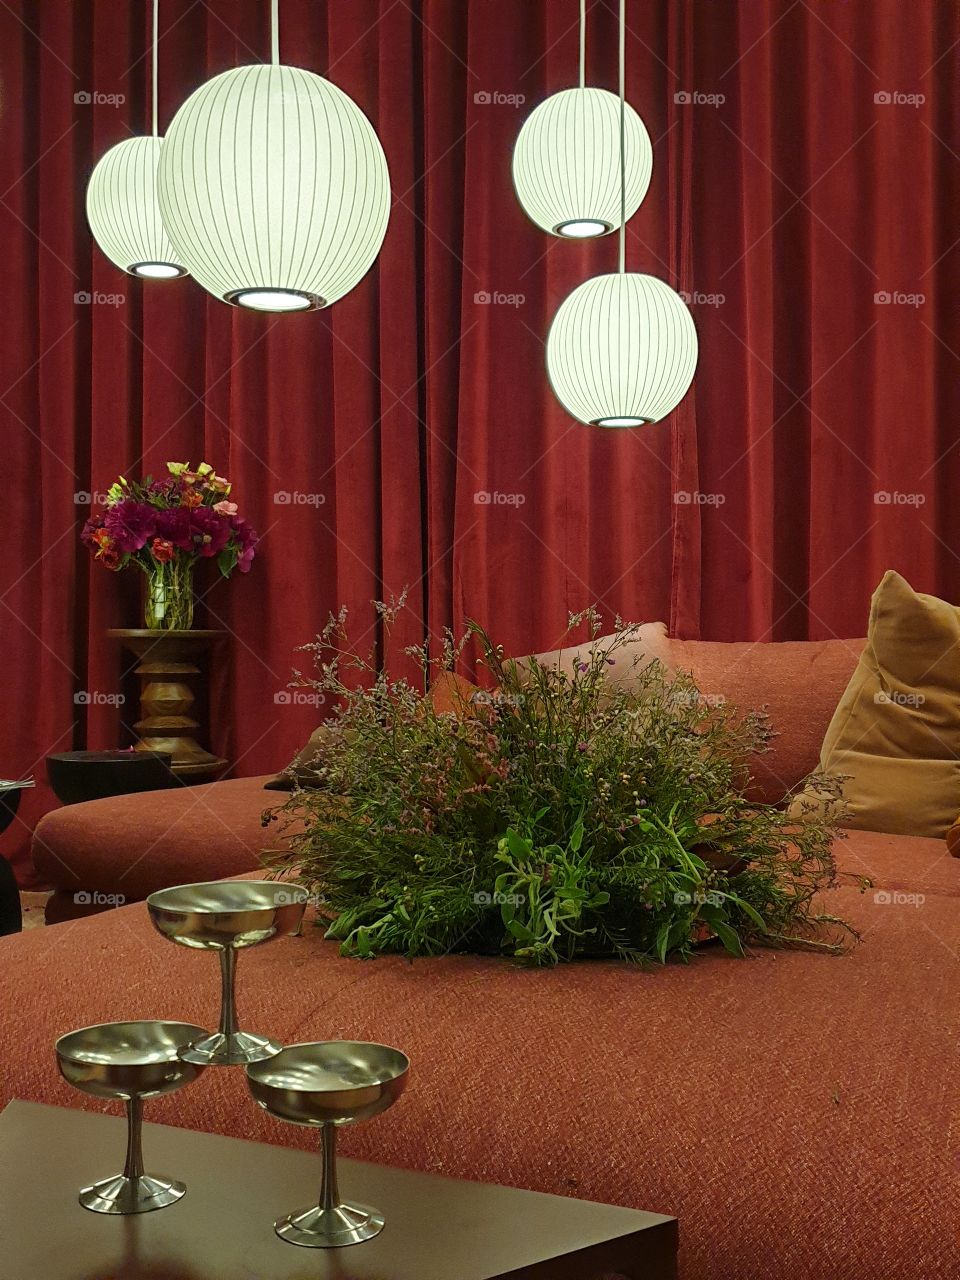 Interior design with round lamps